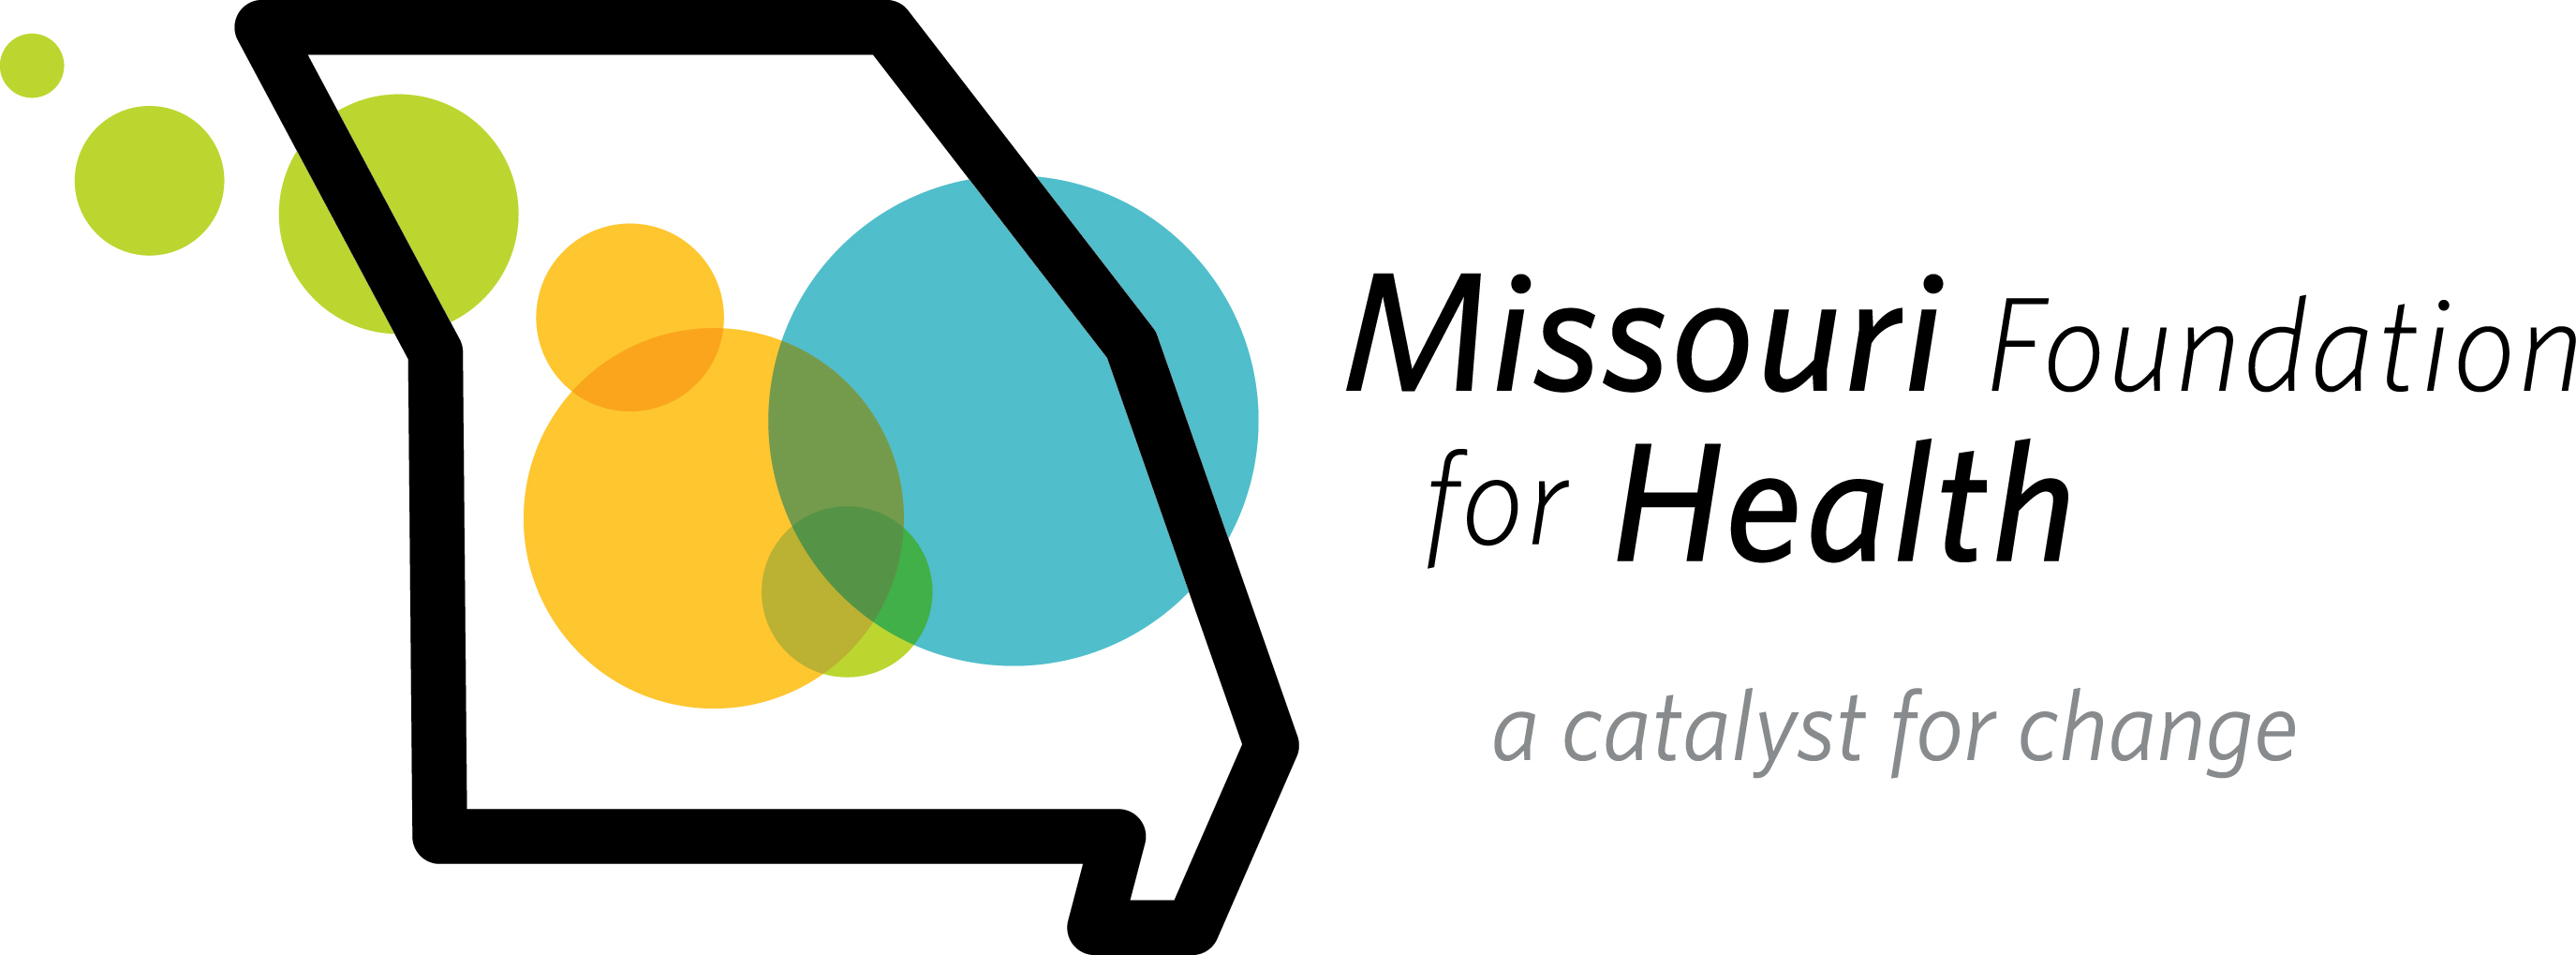 The Missouri Foundation for Health 